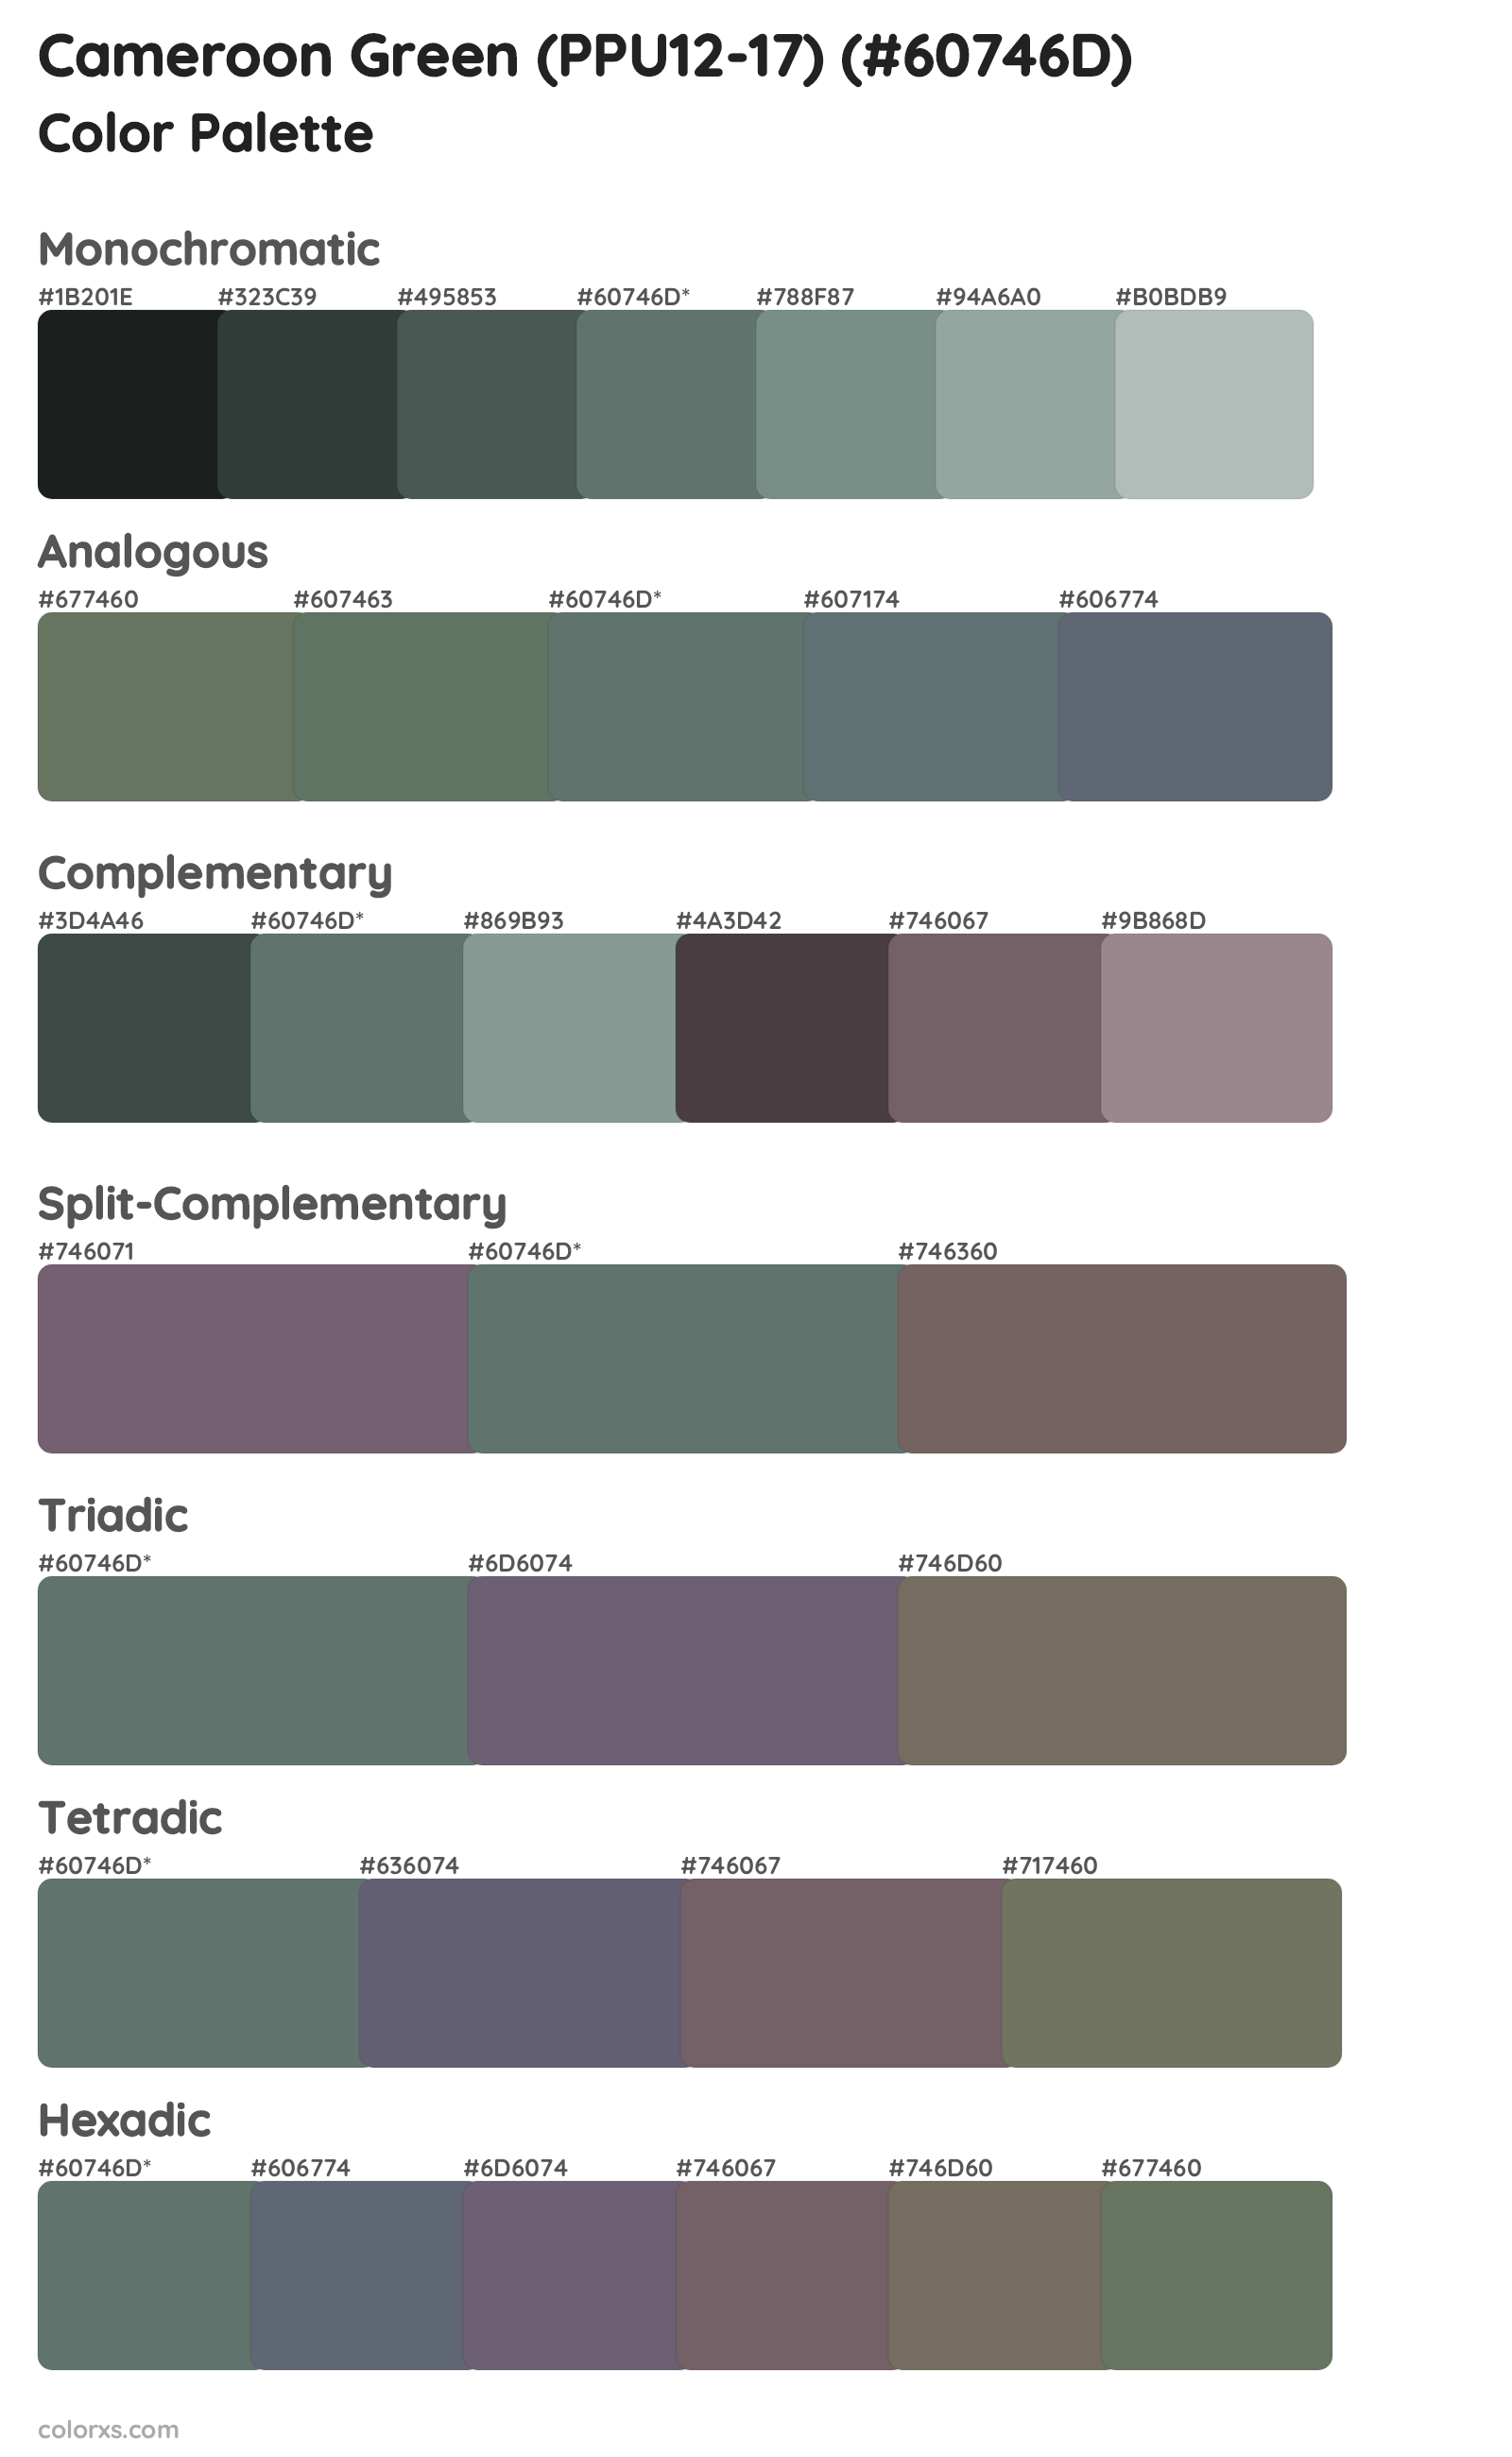 Cameroon Green (PPU12-17) Color Scheme Palettes